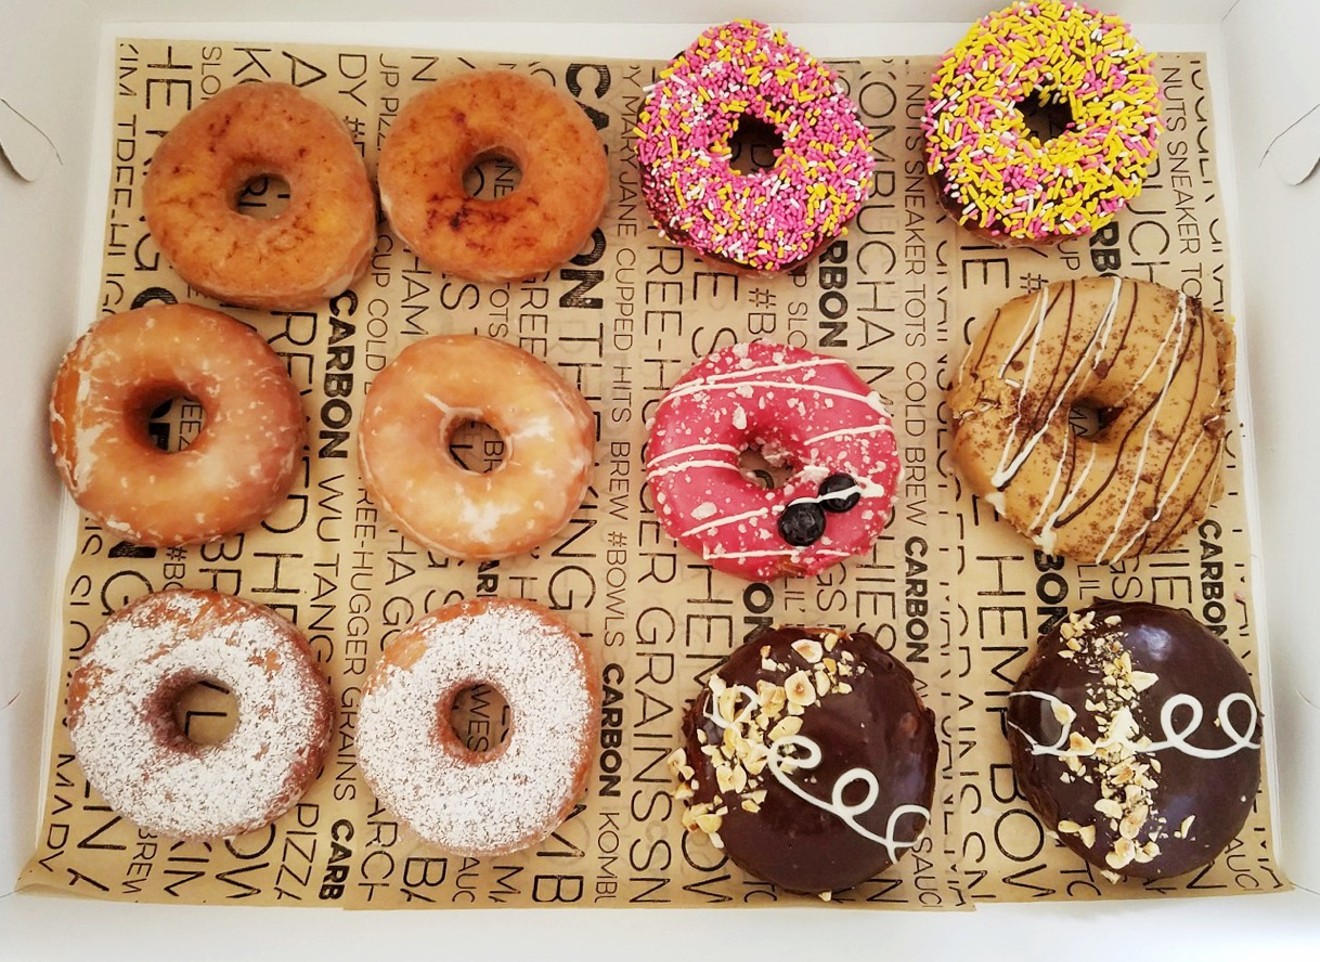 A dozen doughnuts from Habit Doughnut Dispensary.